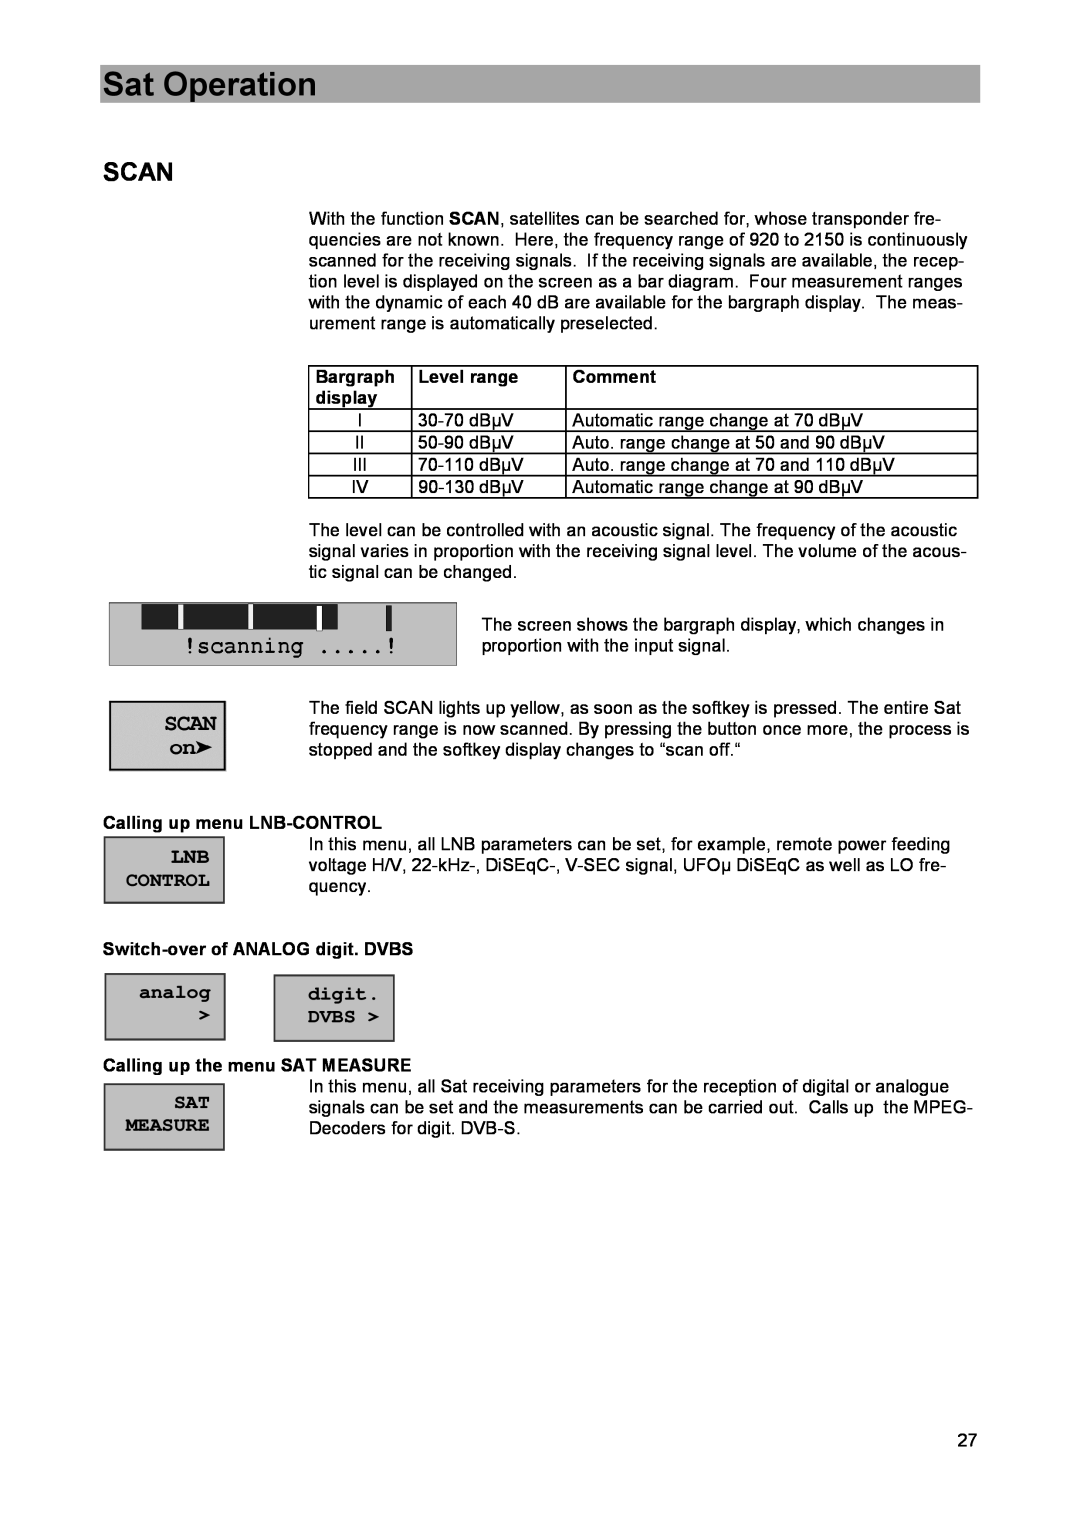 DreamGEAR MSK 33 manual Scan, Sat Operation, Bargraph, Level range, Comment, display, Calling up menu LNB-CONTROL 